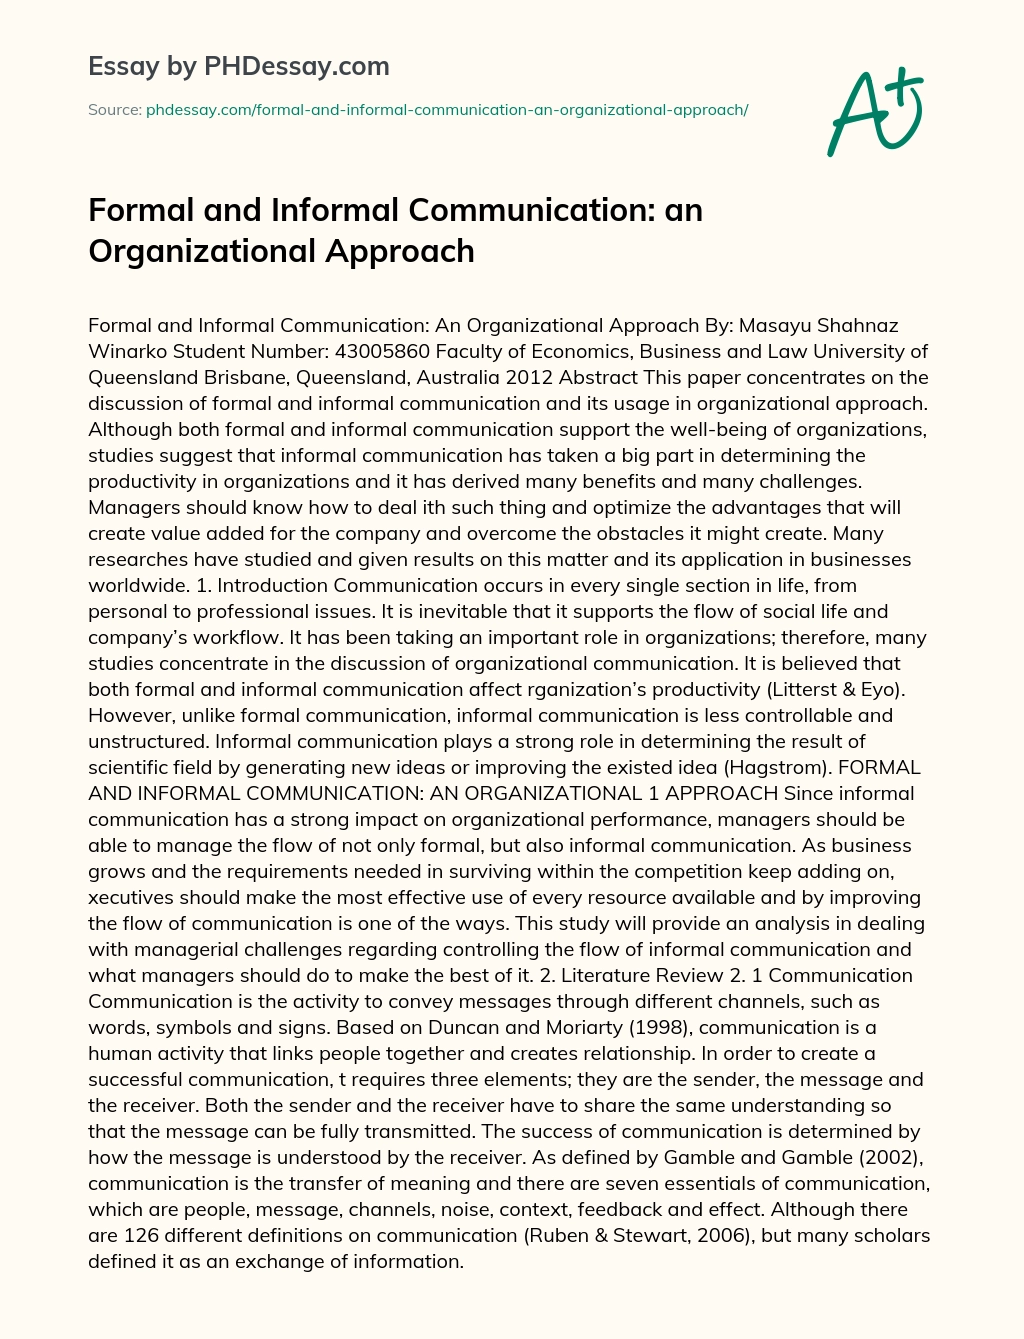 Formal and Informal Communication: an Organizational Approach essay